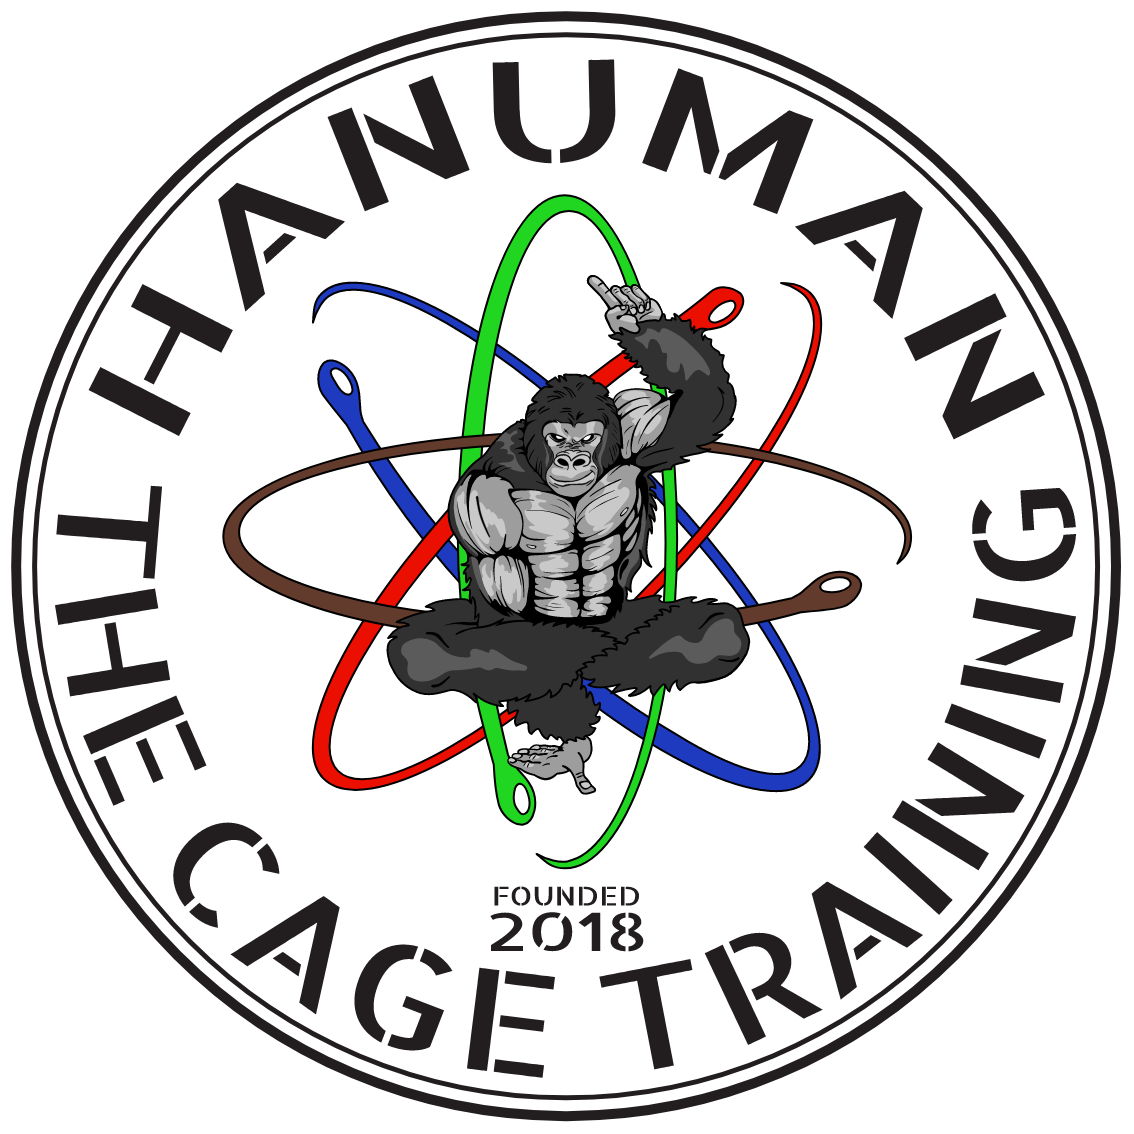 Hanuman The Cage Training